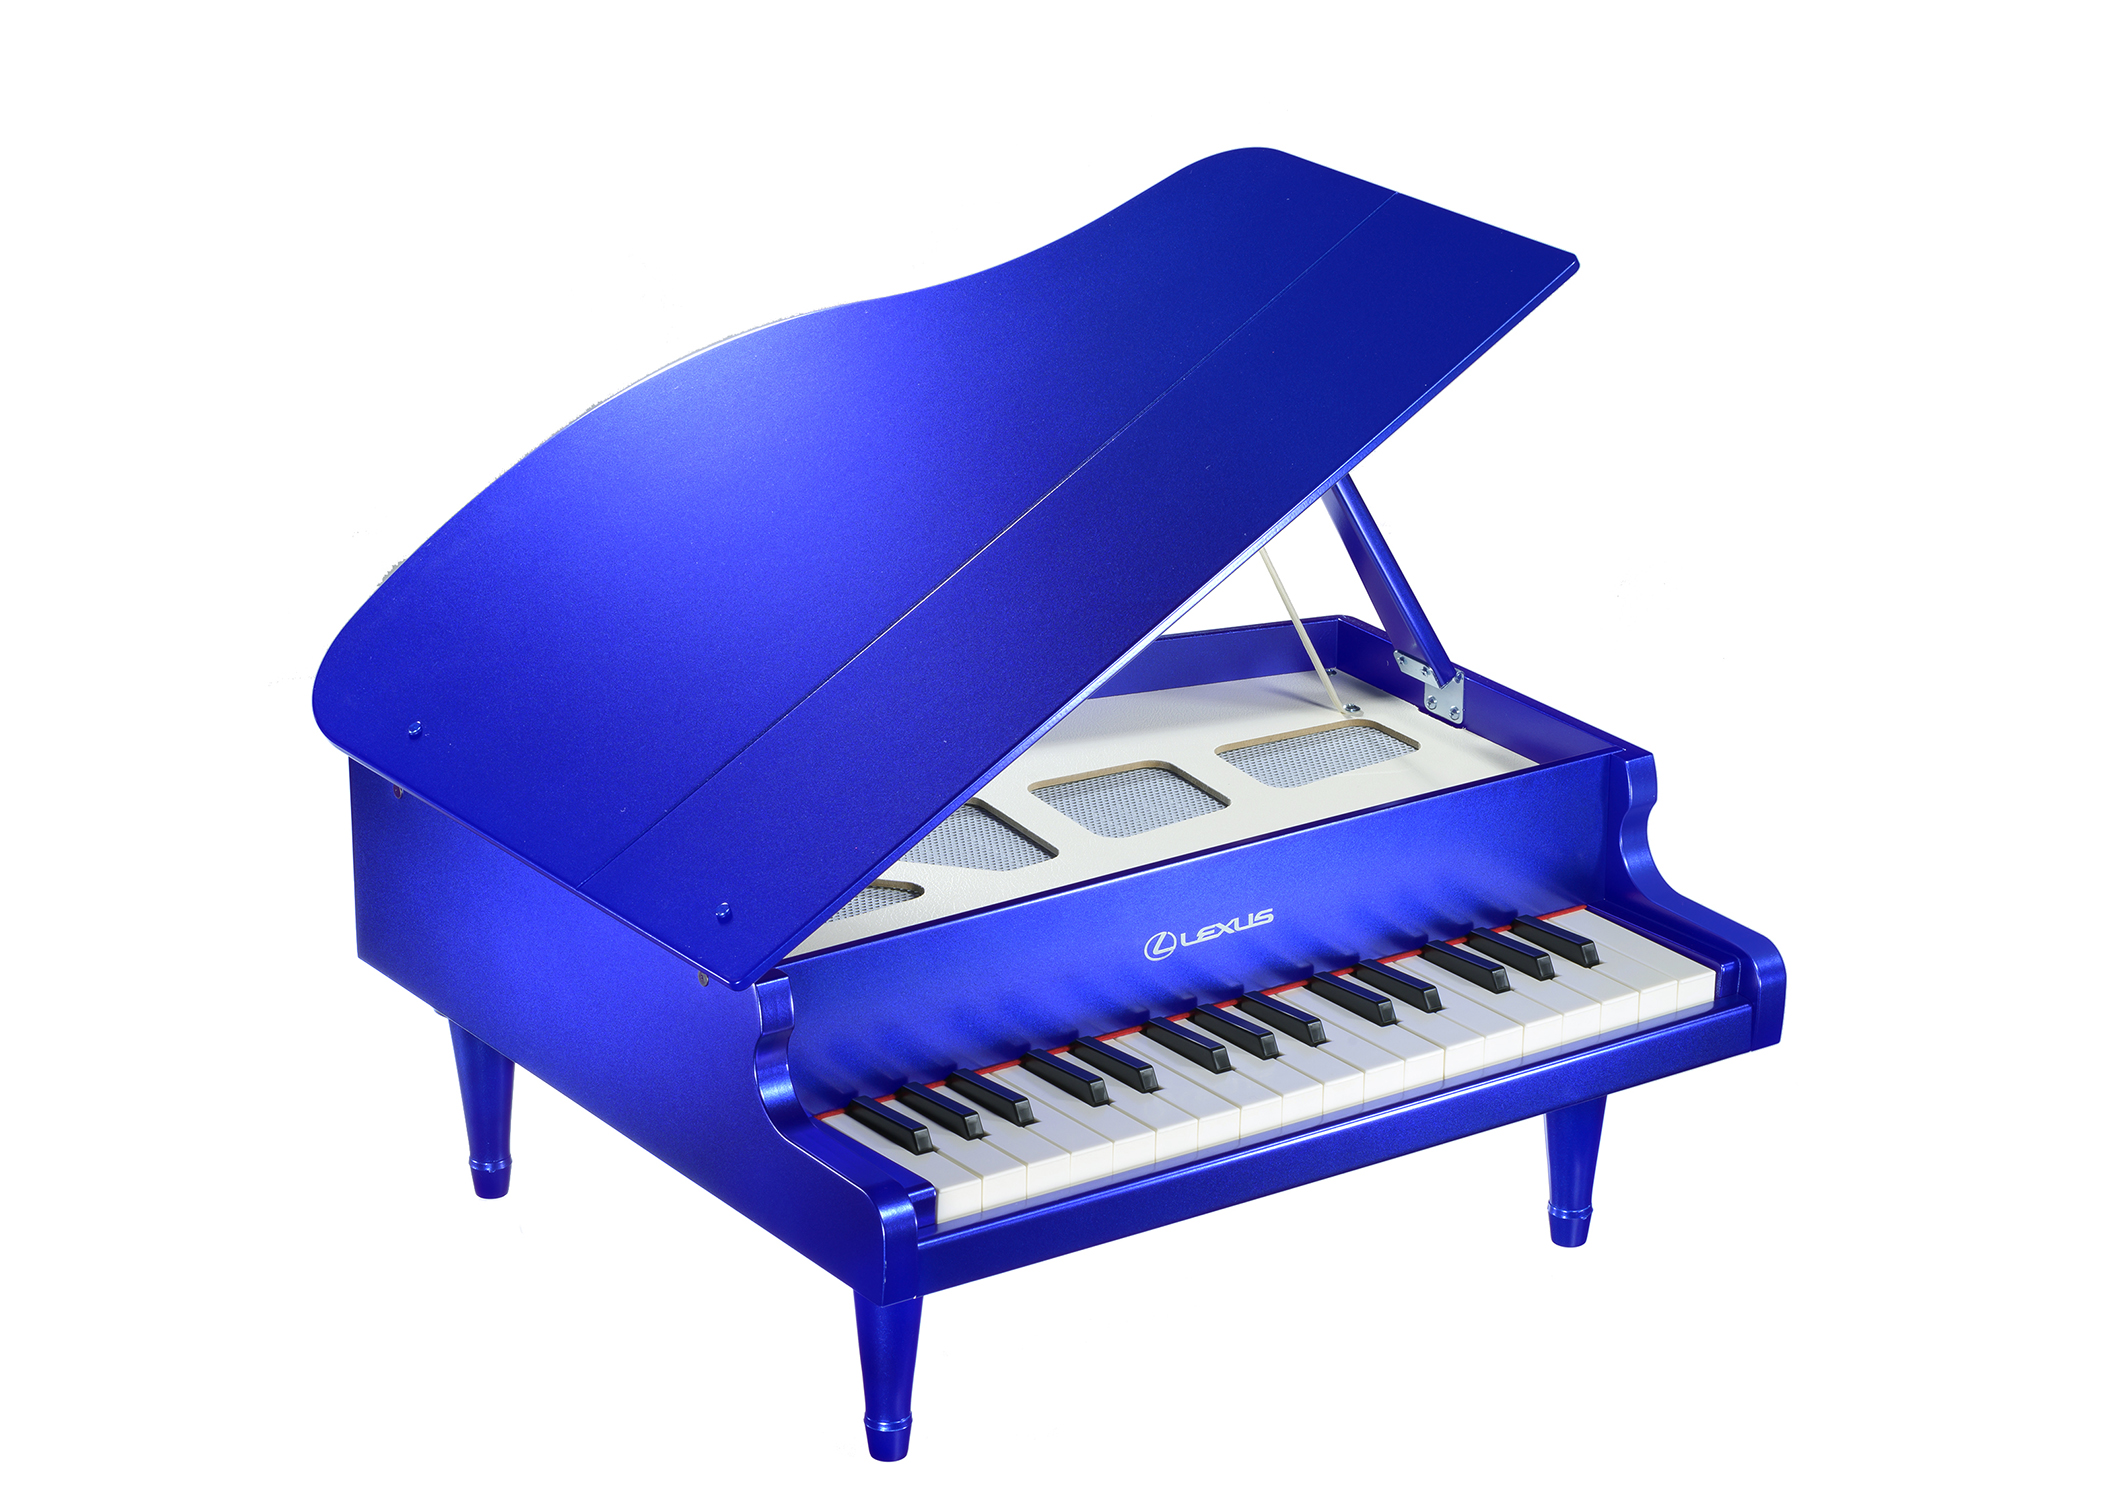 Lexus Collection ミニグランドピアノに新色 ストラクチュラルブルー が新登場 株式会社河合楽器製作所のプレスリリース